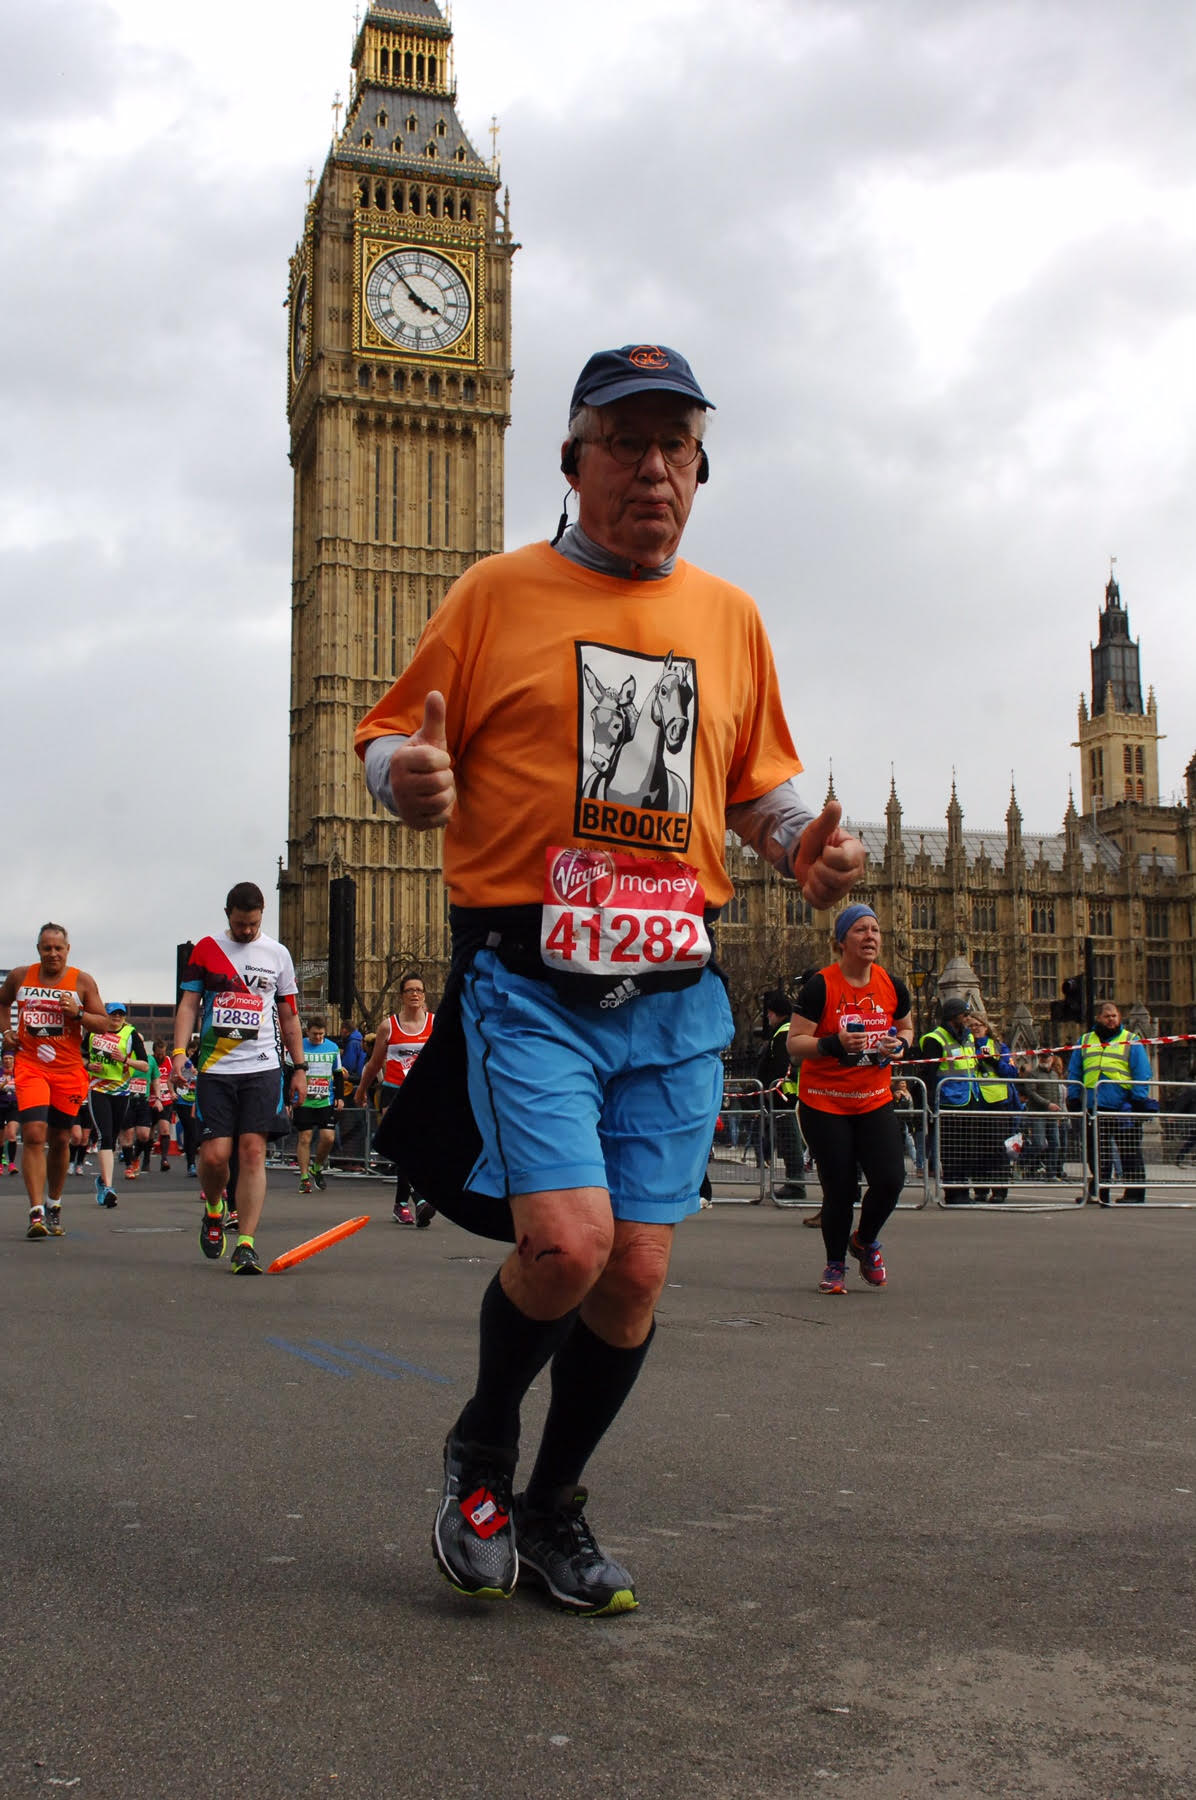 Fritz Kundrun running the London Marathon to raise awareness for Brooke USA. Photo courtesy of the London Marathon.